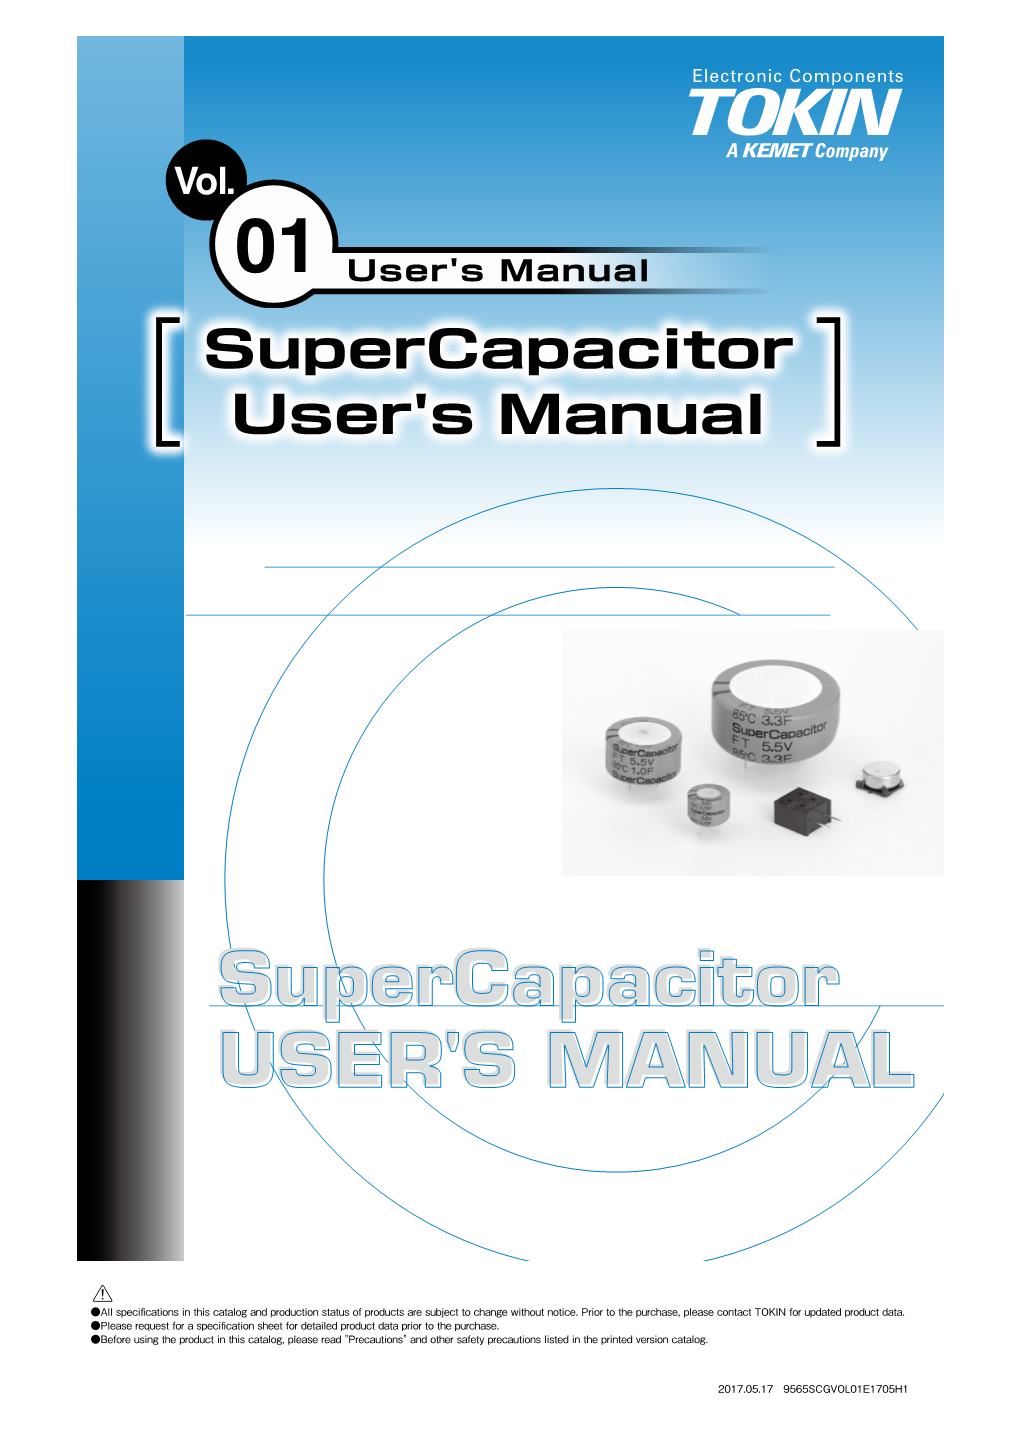 Supercapacitor USER's MANUAL VOL.01 3